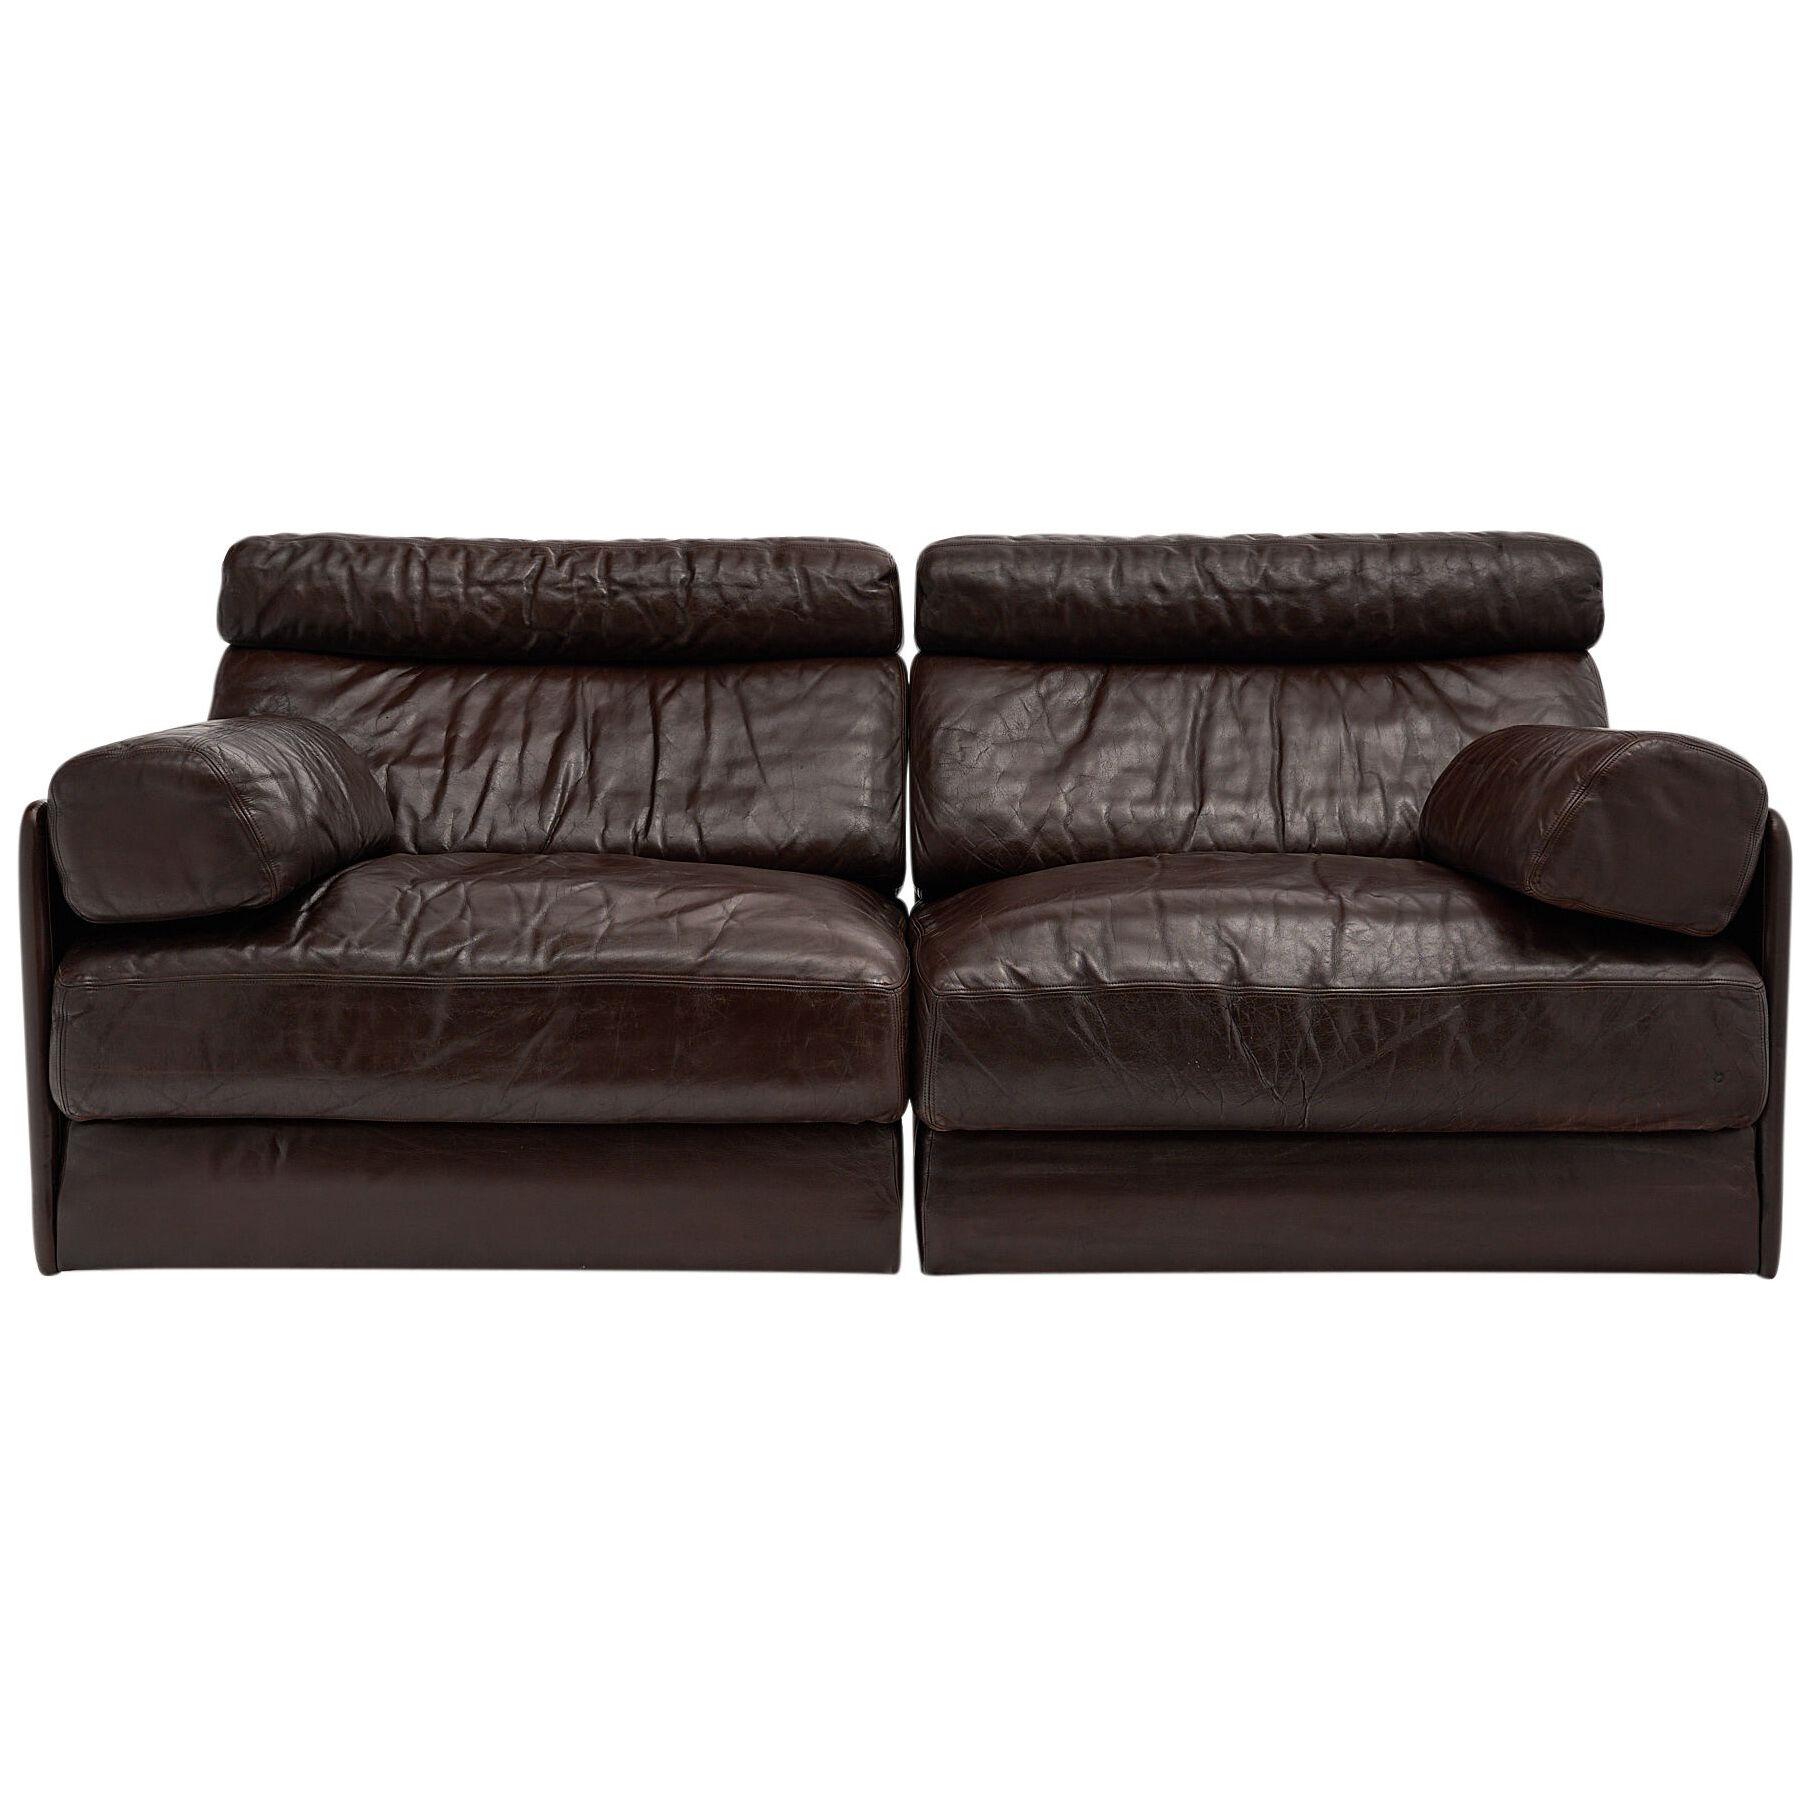 DeSede DS 76 Vintage Leather Sofa